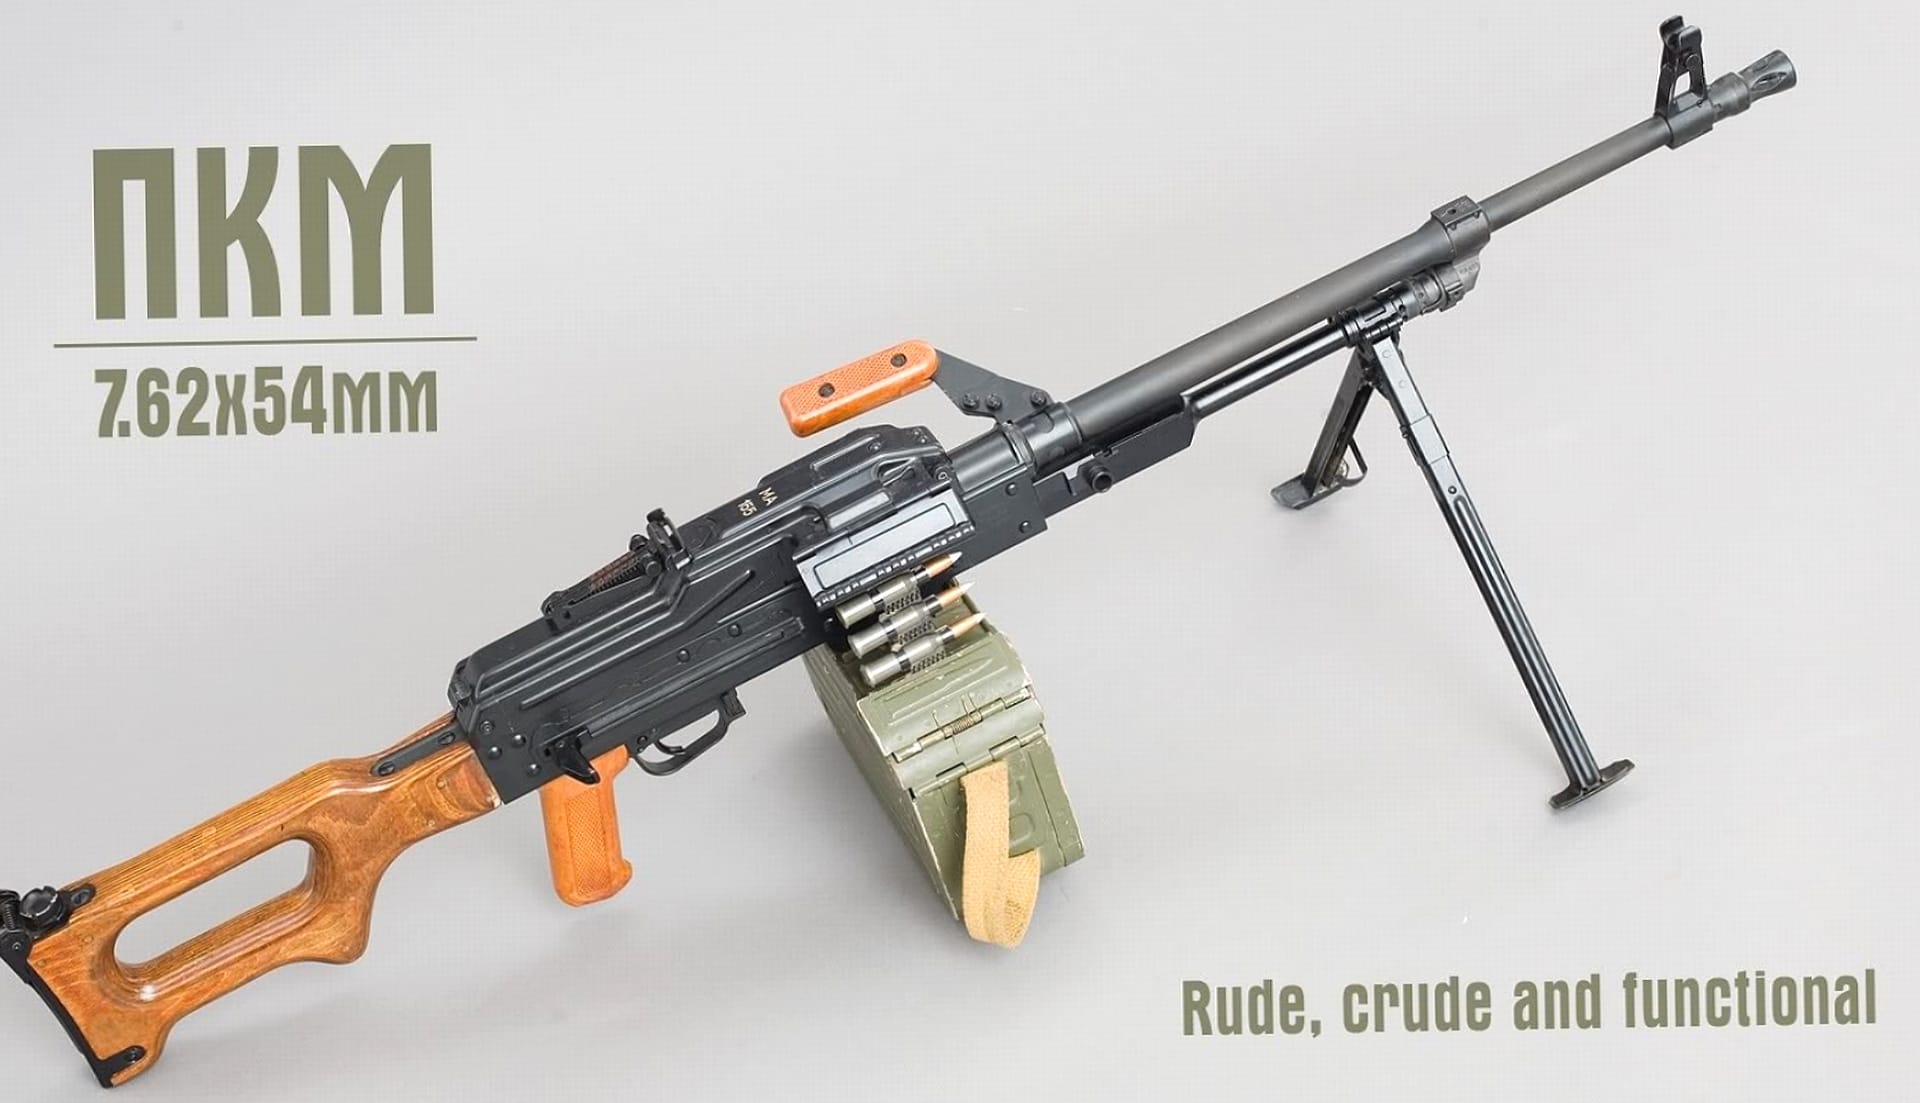 Pkm Machine Gun at 320 x 480 iPhone size wallpapers HD quality